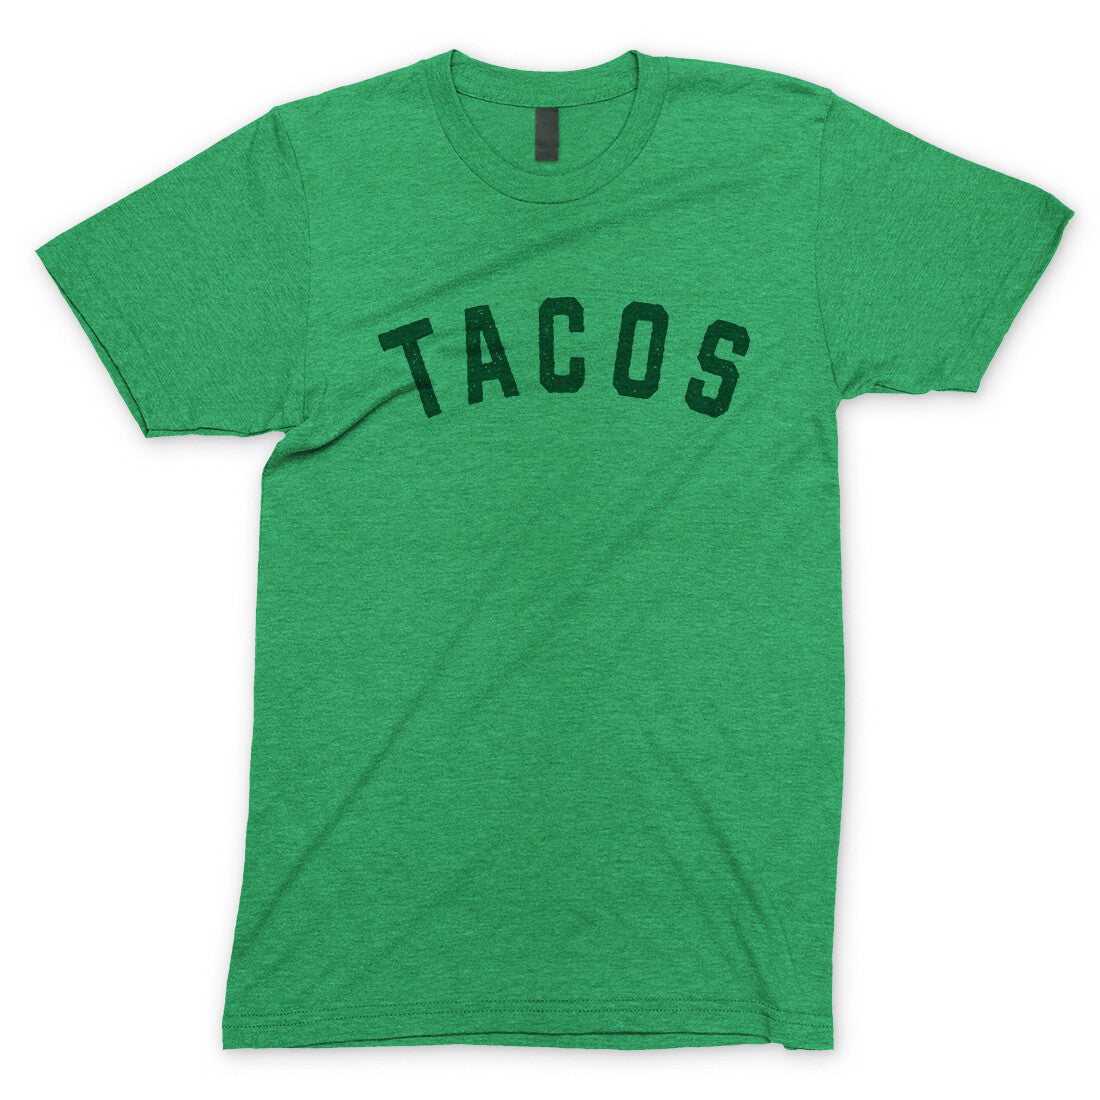 Tacos in Heather Irish Green Color